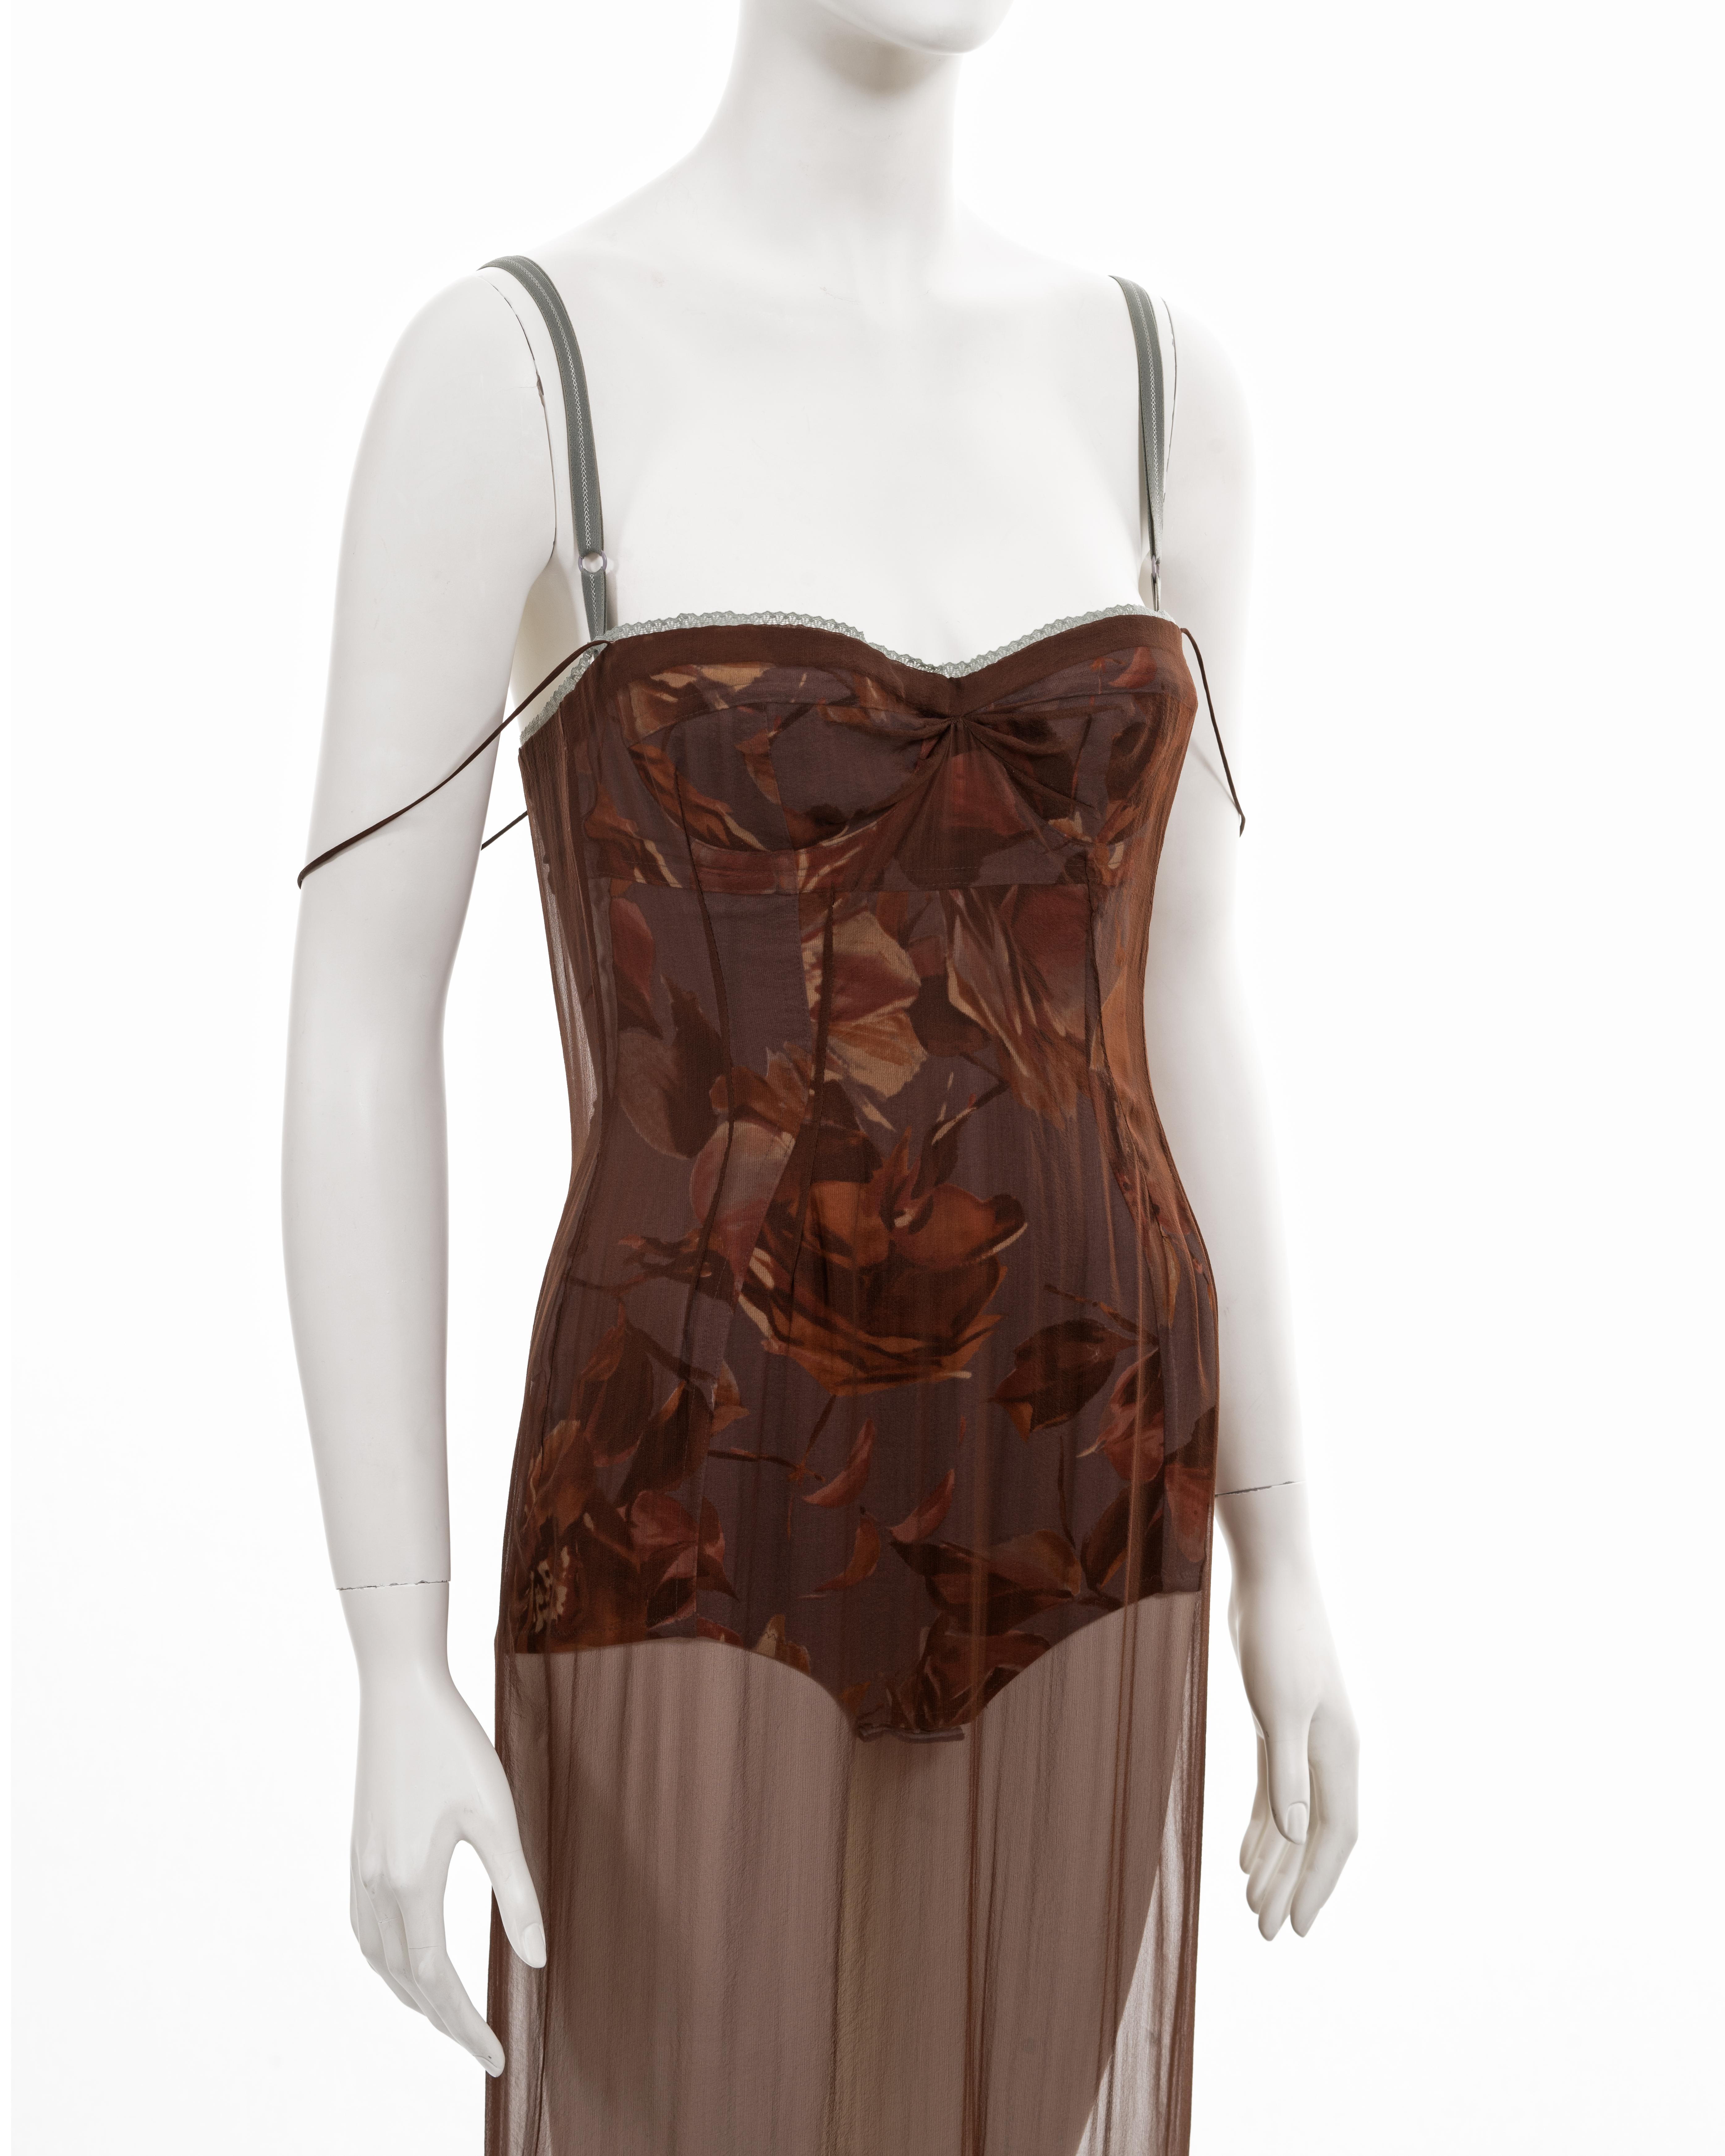 Dolce & Gabbana brown silk chiffon evening dress with built-in bodysuit, ss 1997 10